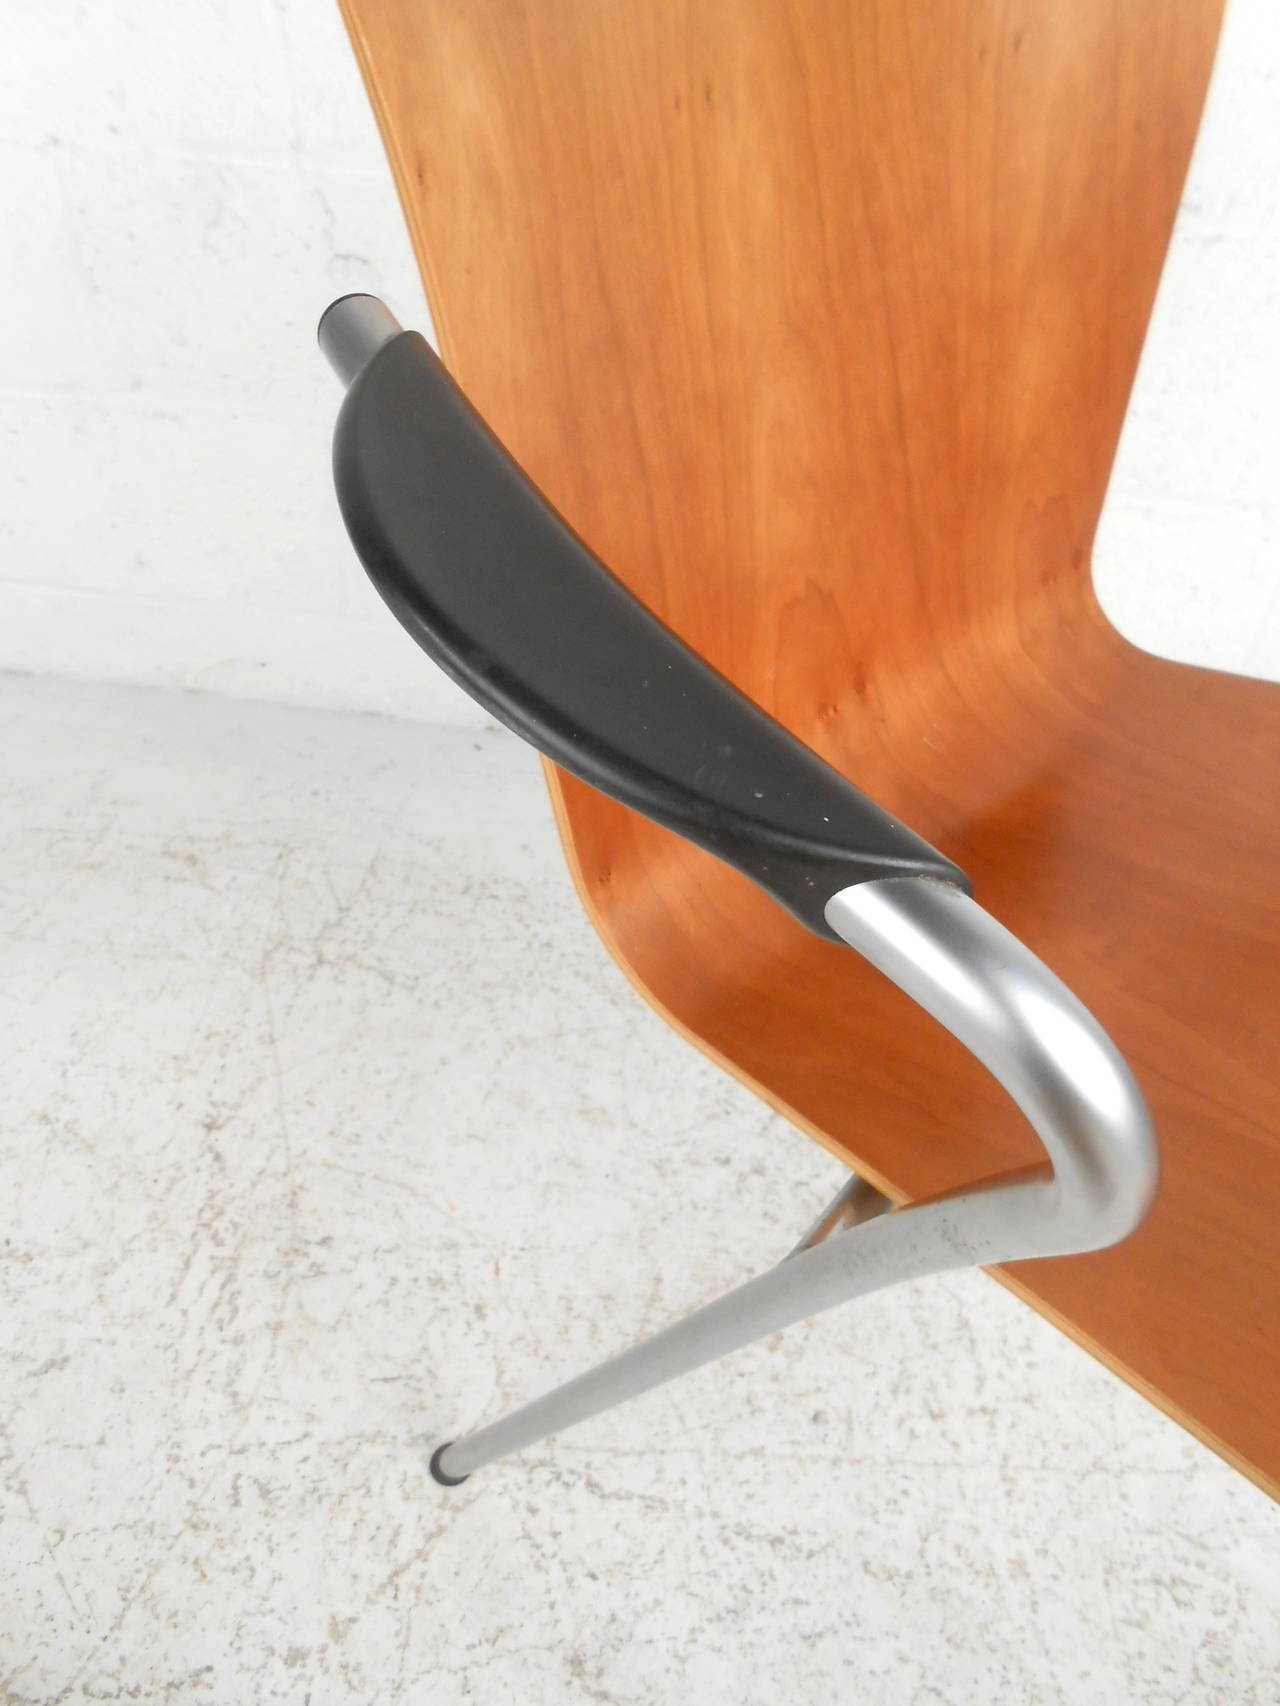 Scandinavian Modern VicoDuo Chair by Vico Magistretti for Fritz Hansen and Knoll Studio